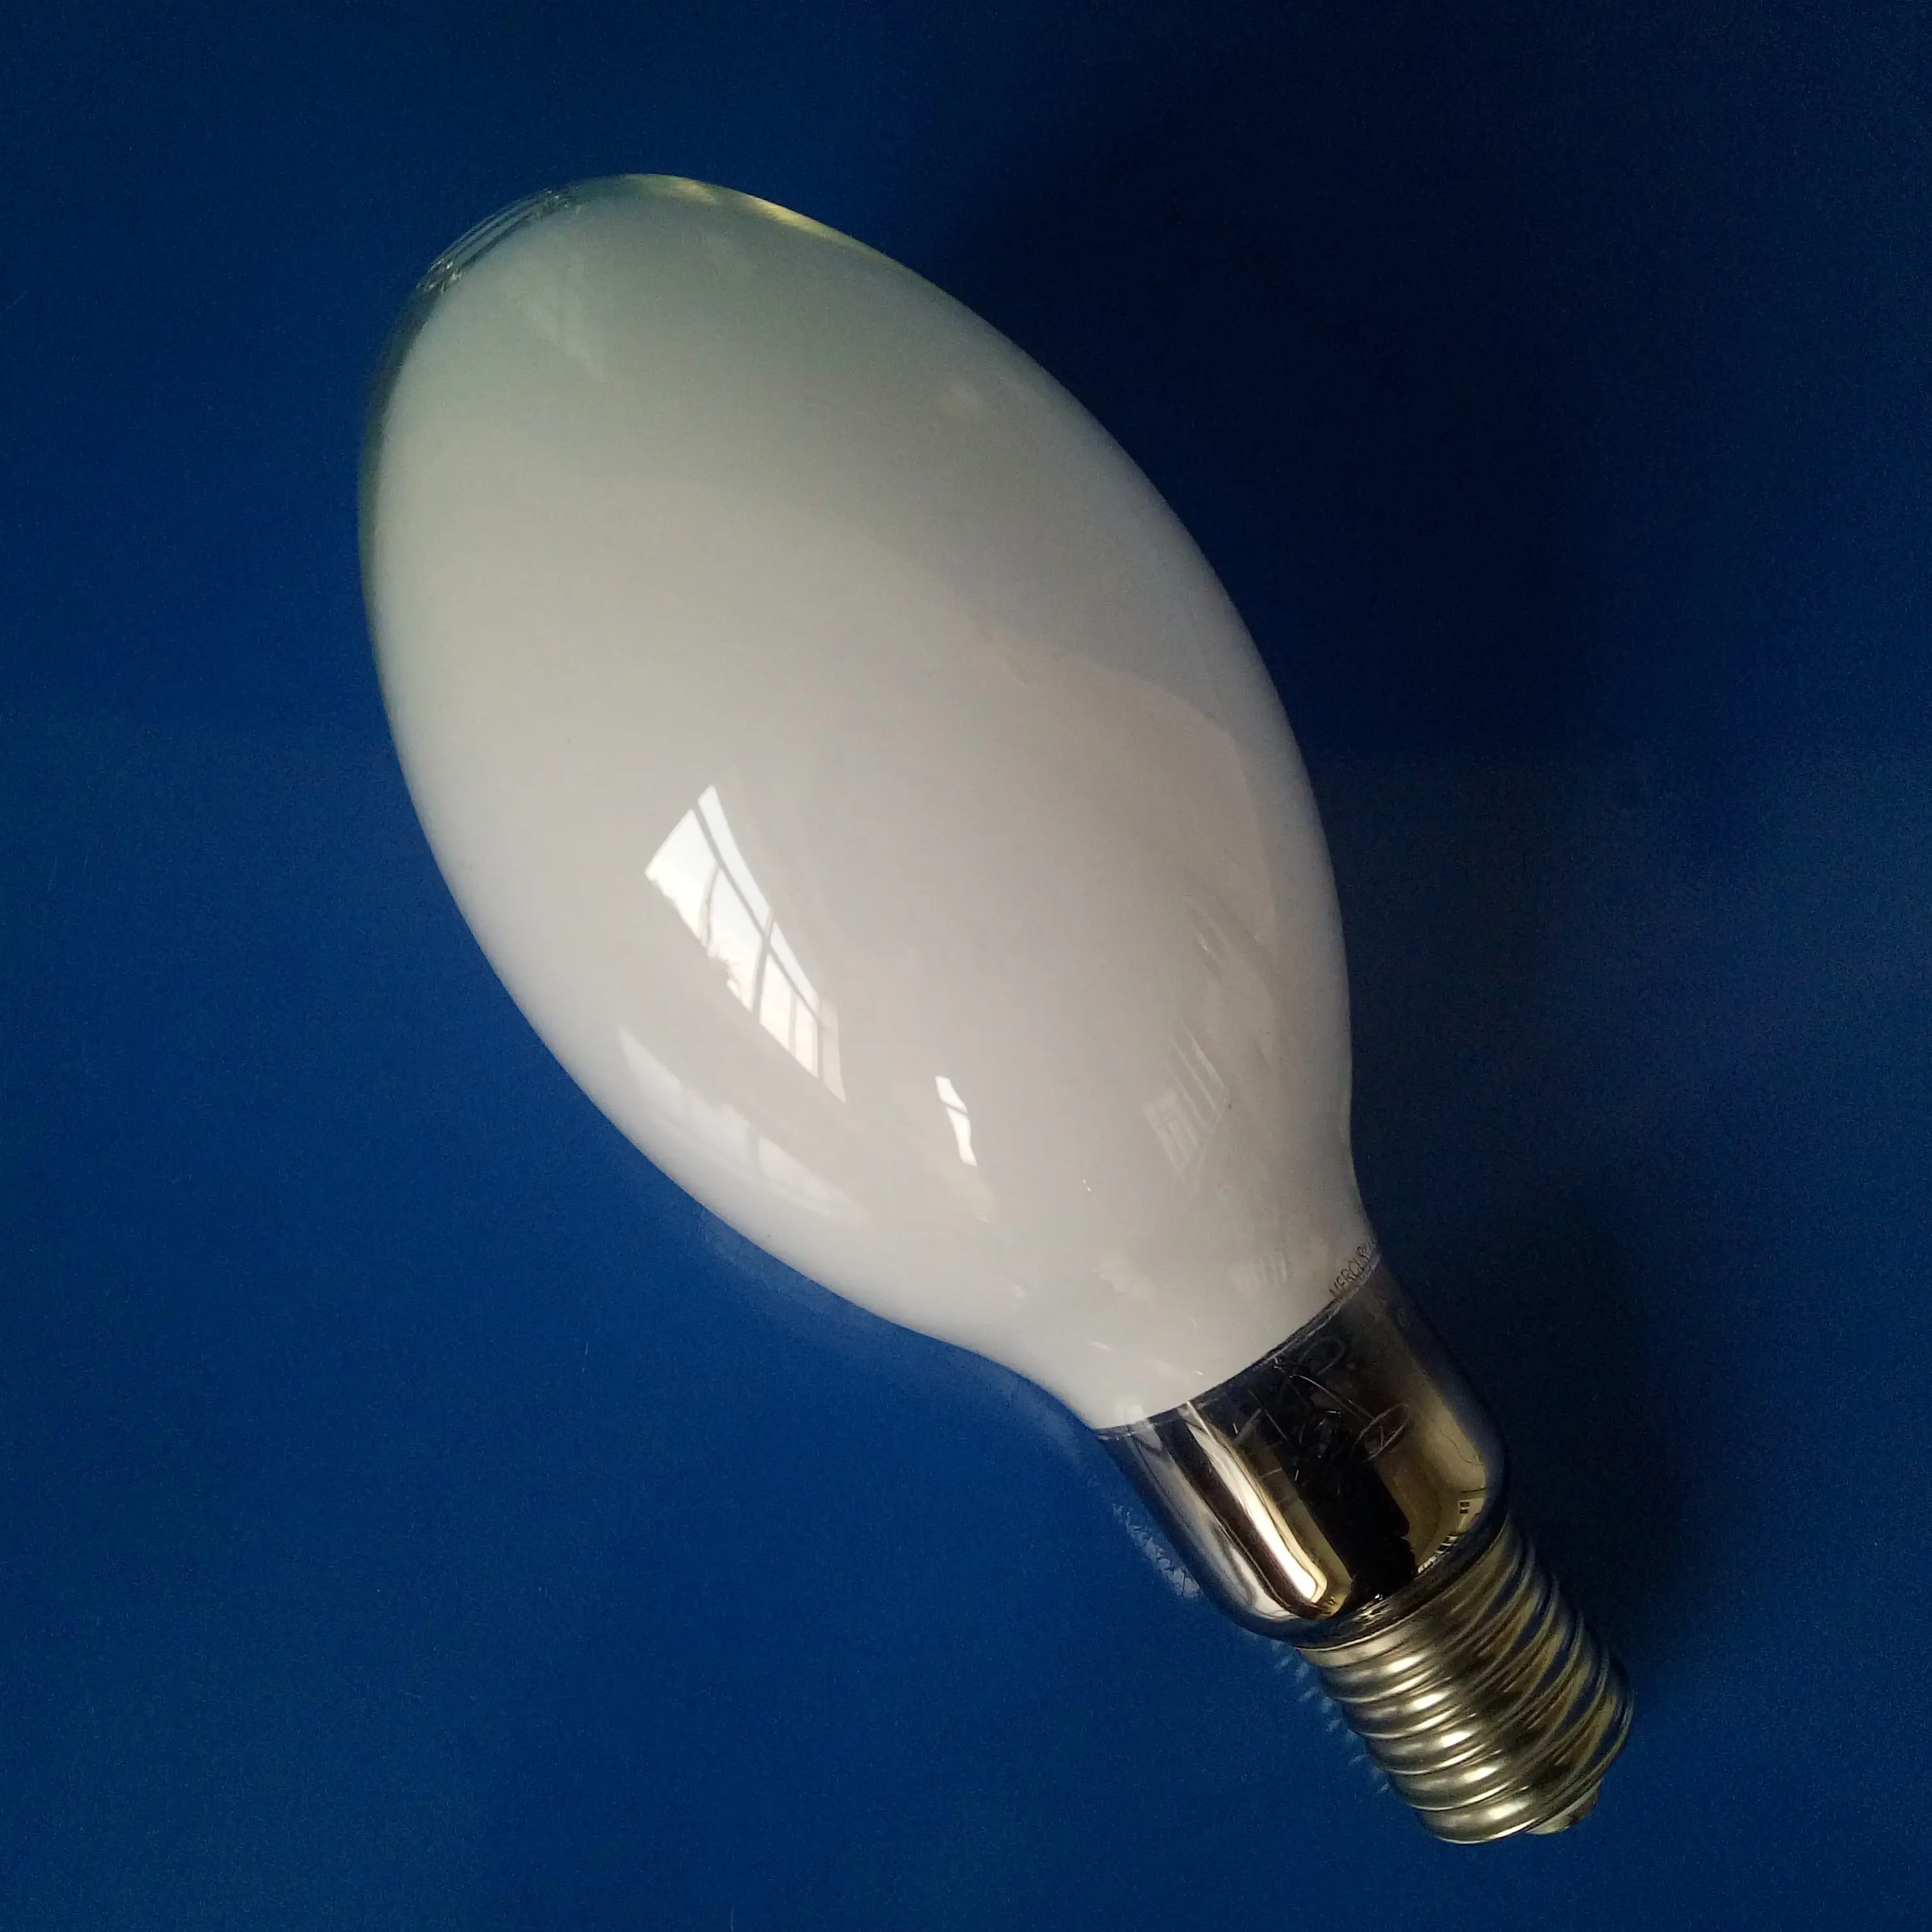 400w mercury vapor lamp HID vapor bulbs ballasted BT shape for enclosed fixtures outdoor lighting arc light